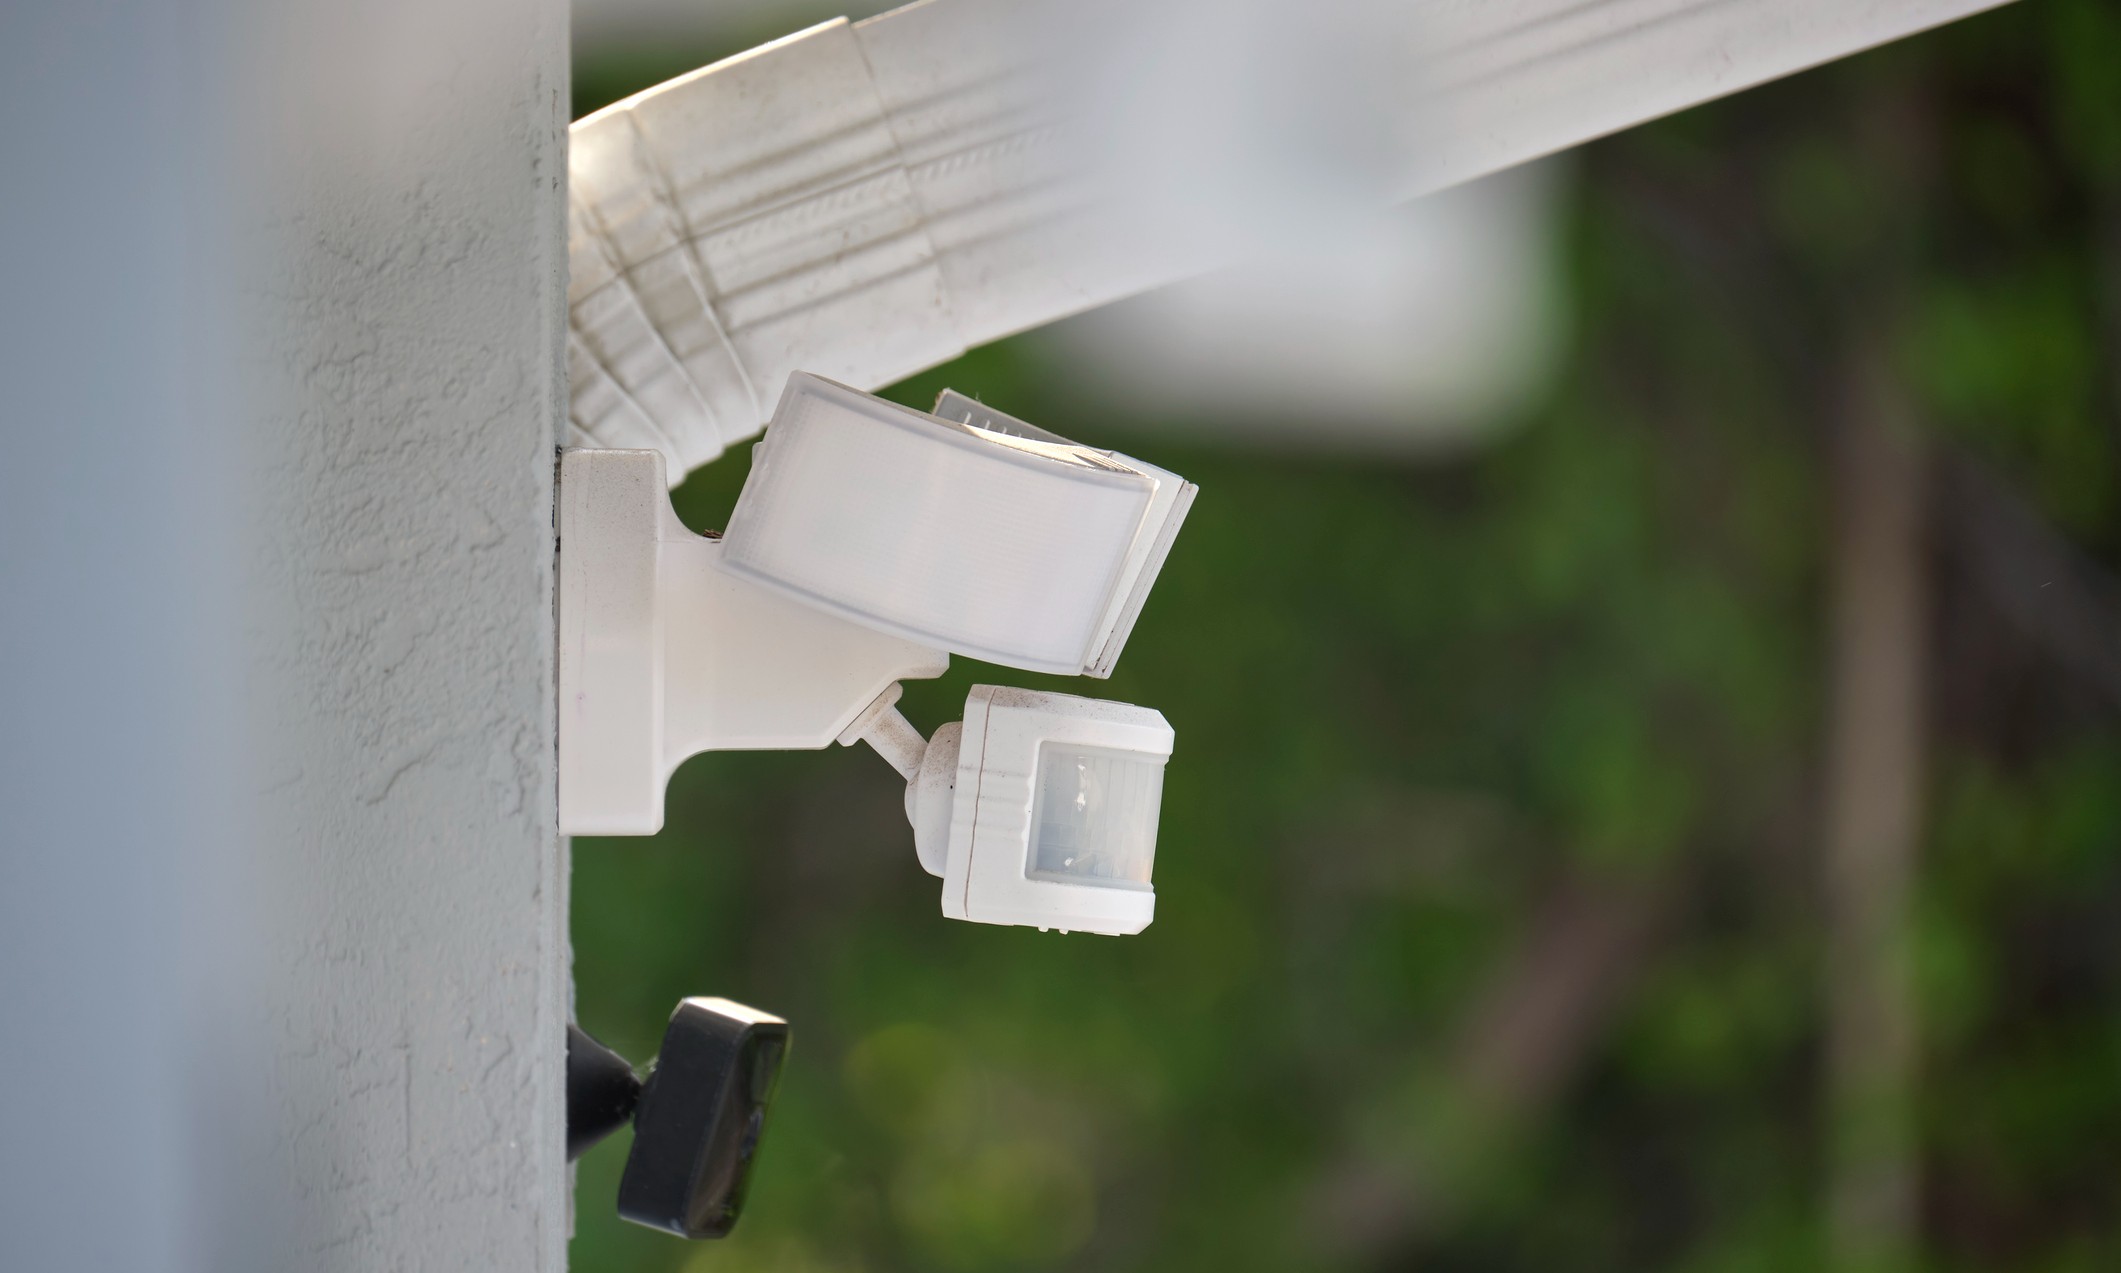 Home security sensors market report